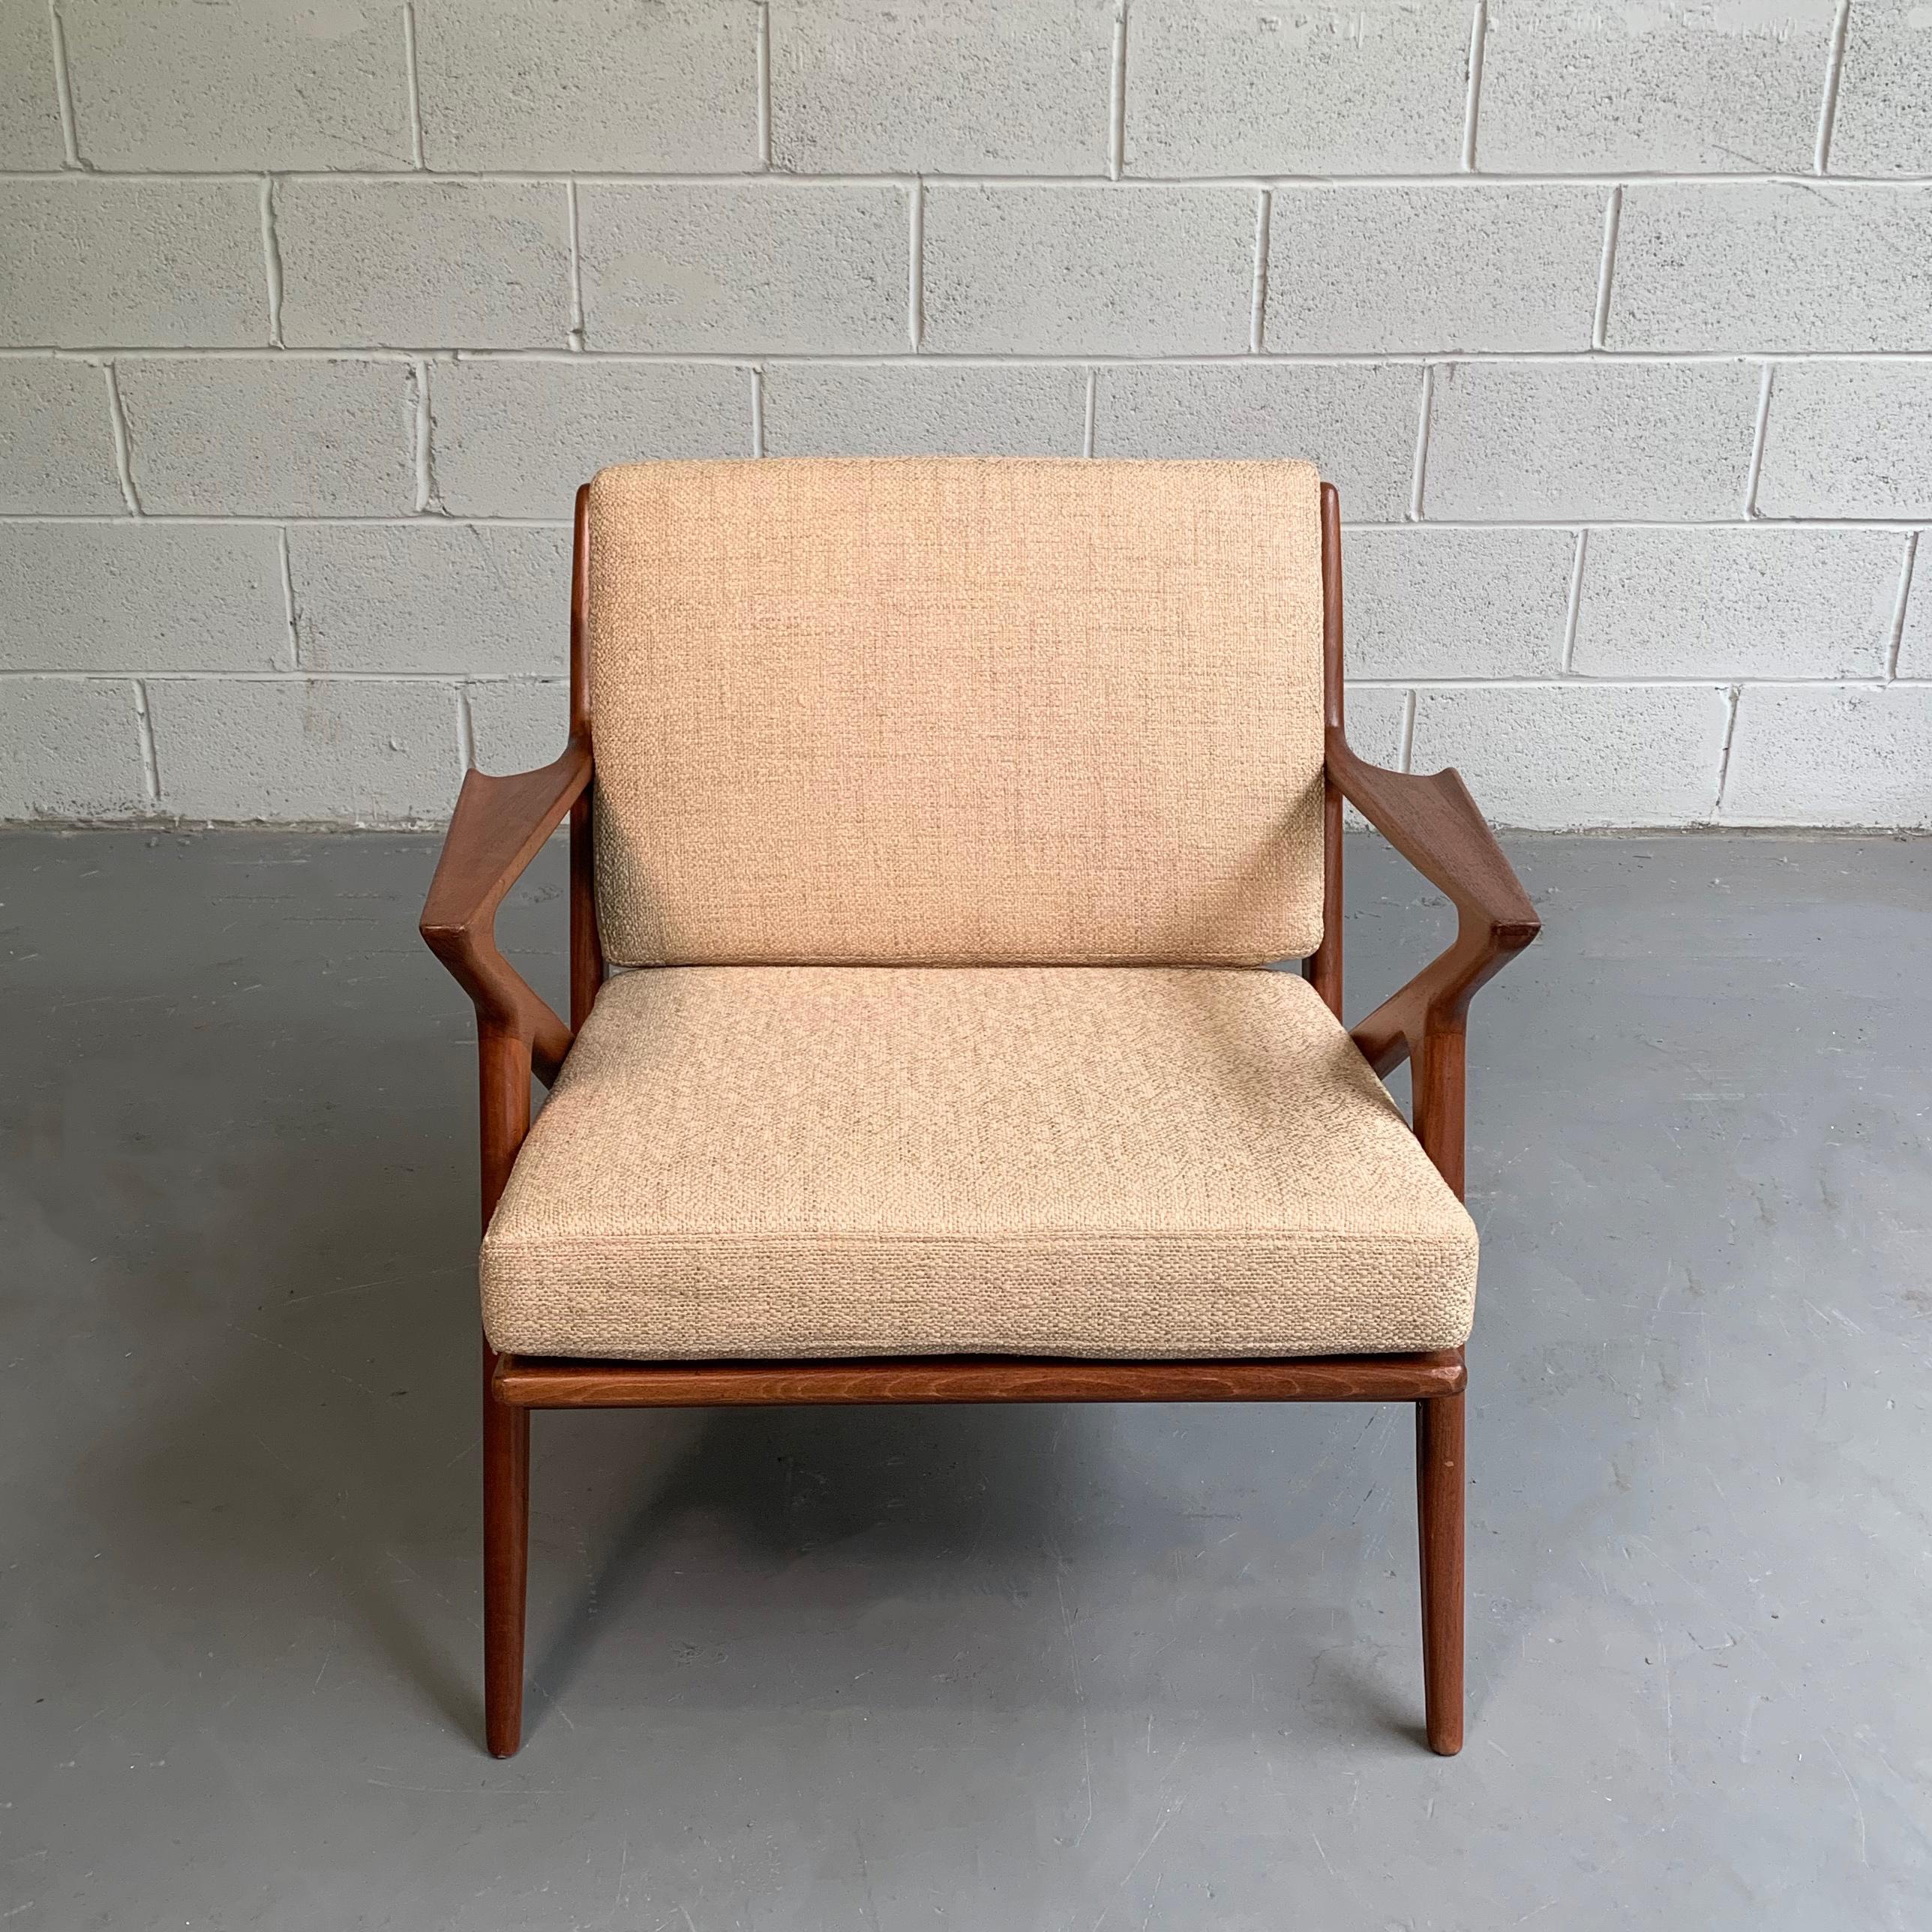 Scandinavian Modern Z Lounge Chair Designed by Poul Jensen 1